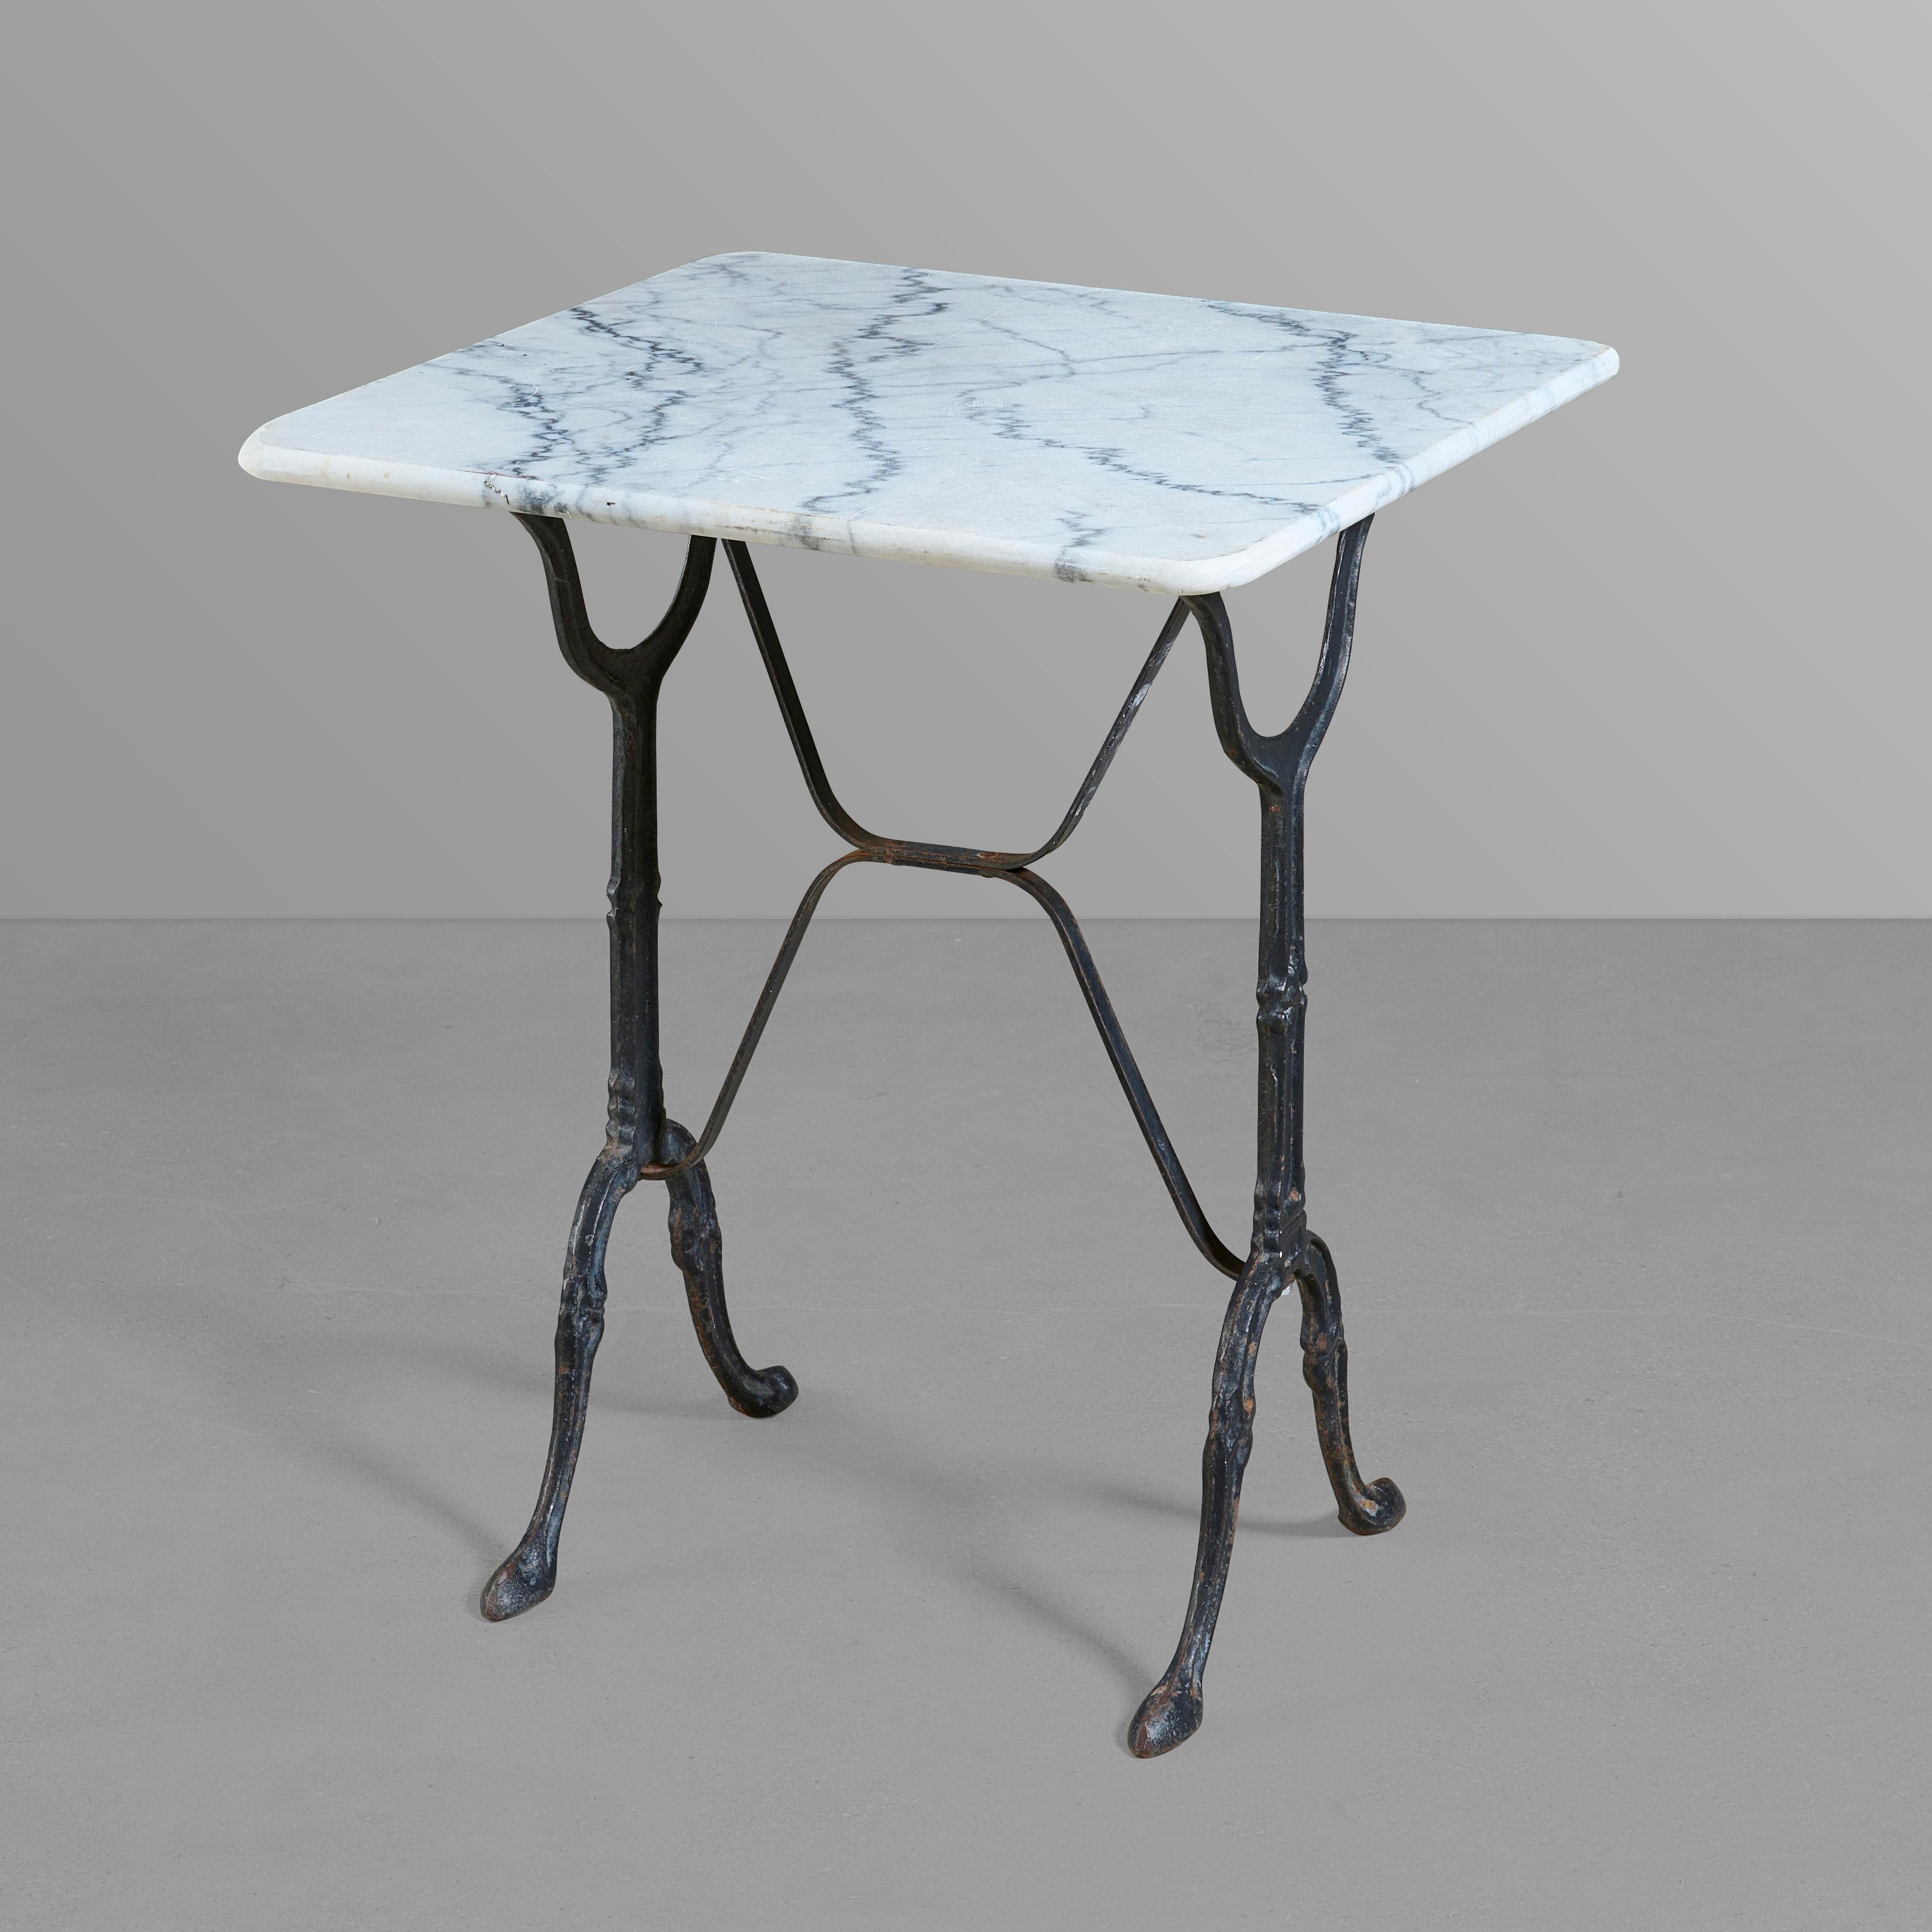 Cast iron cafe table with original Carrara marble top.

